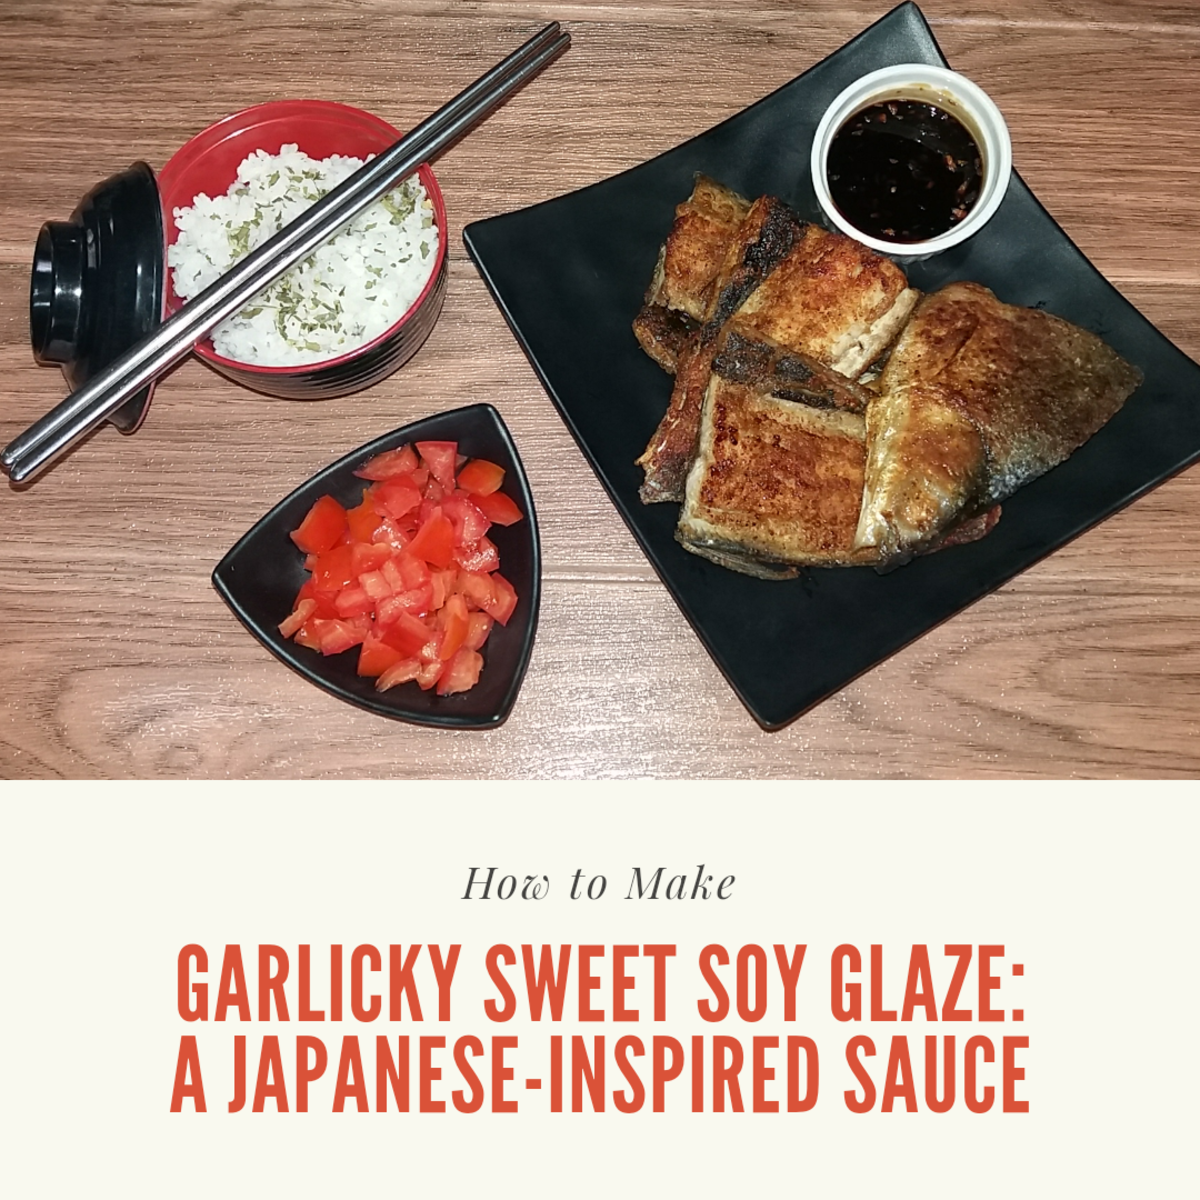 Garlicky-sweet soy glaze: a Japanese-inspired sauce